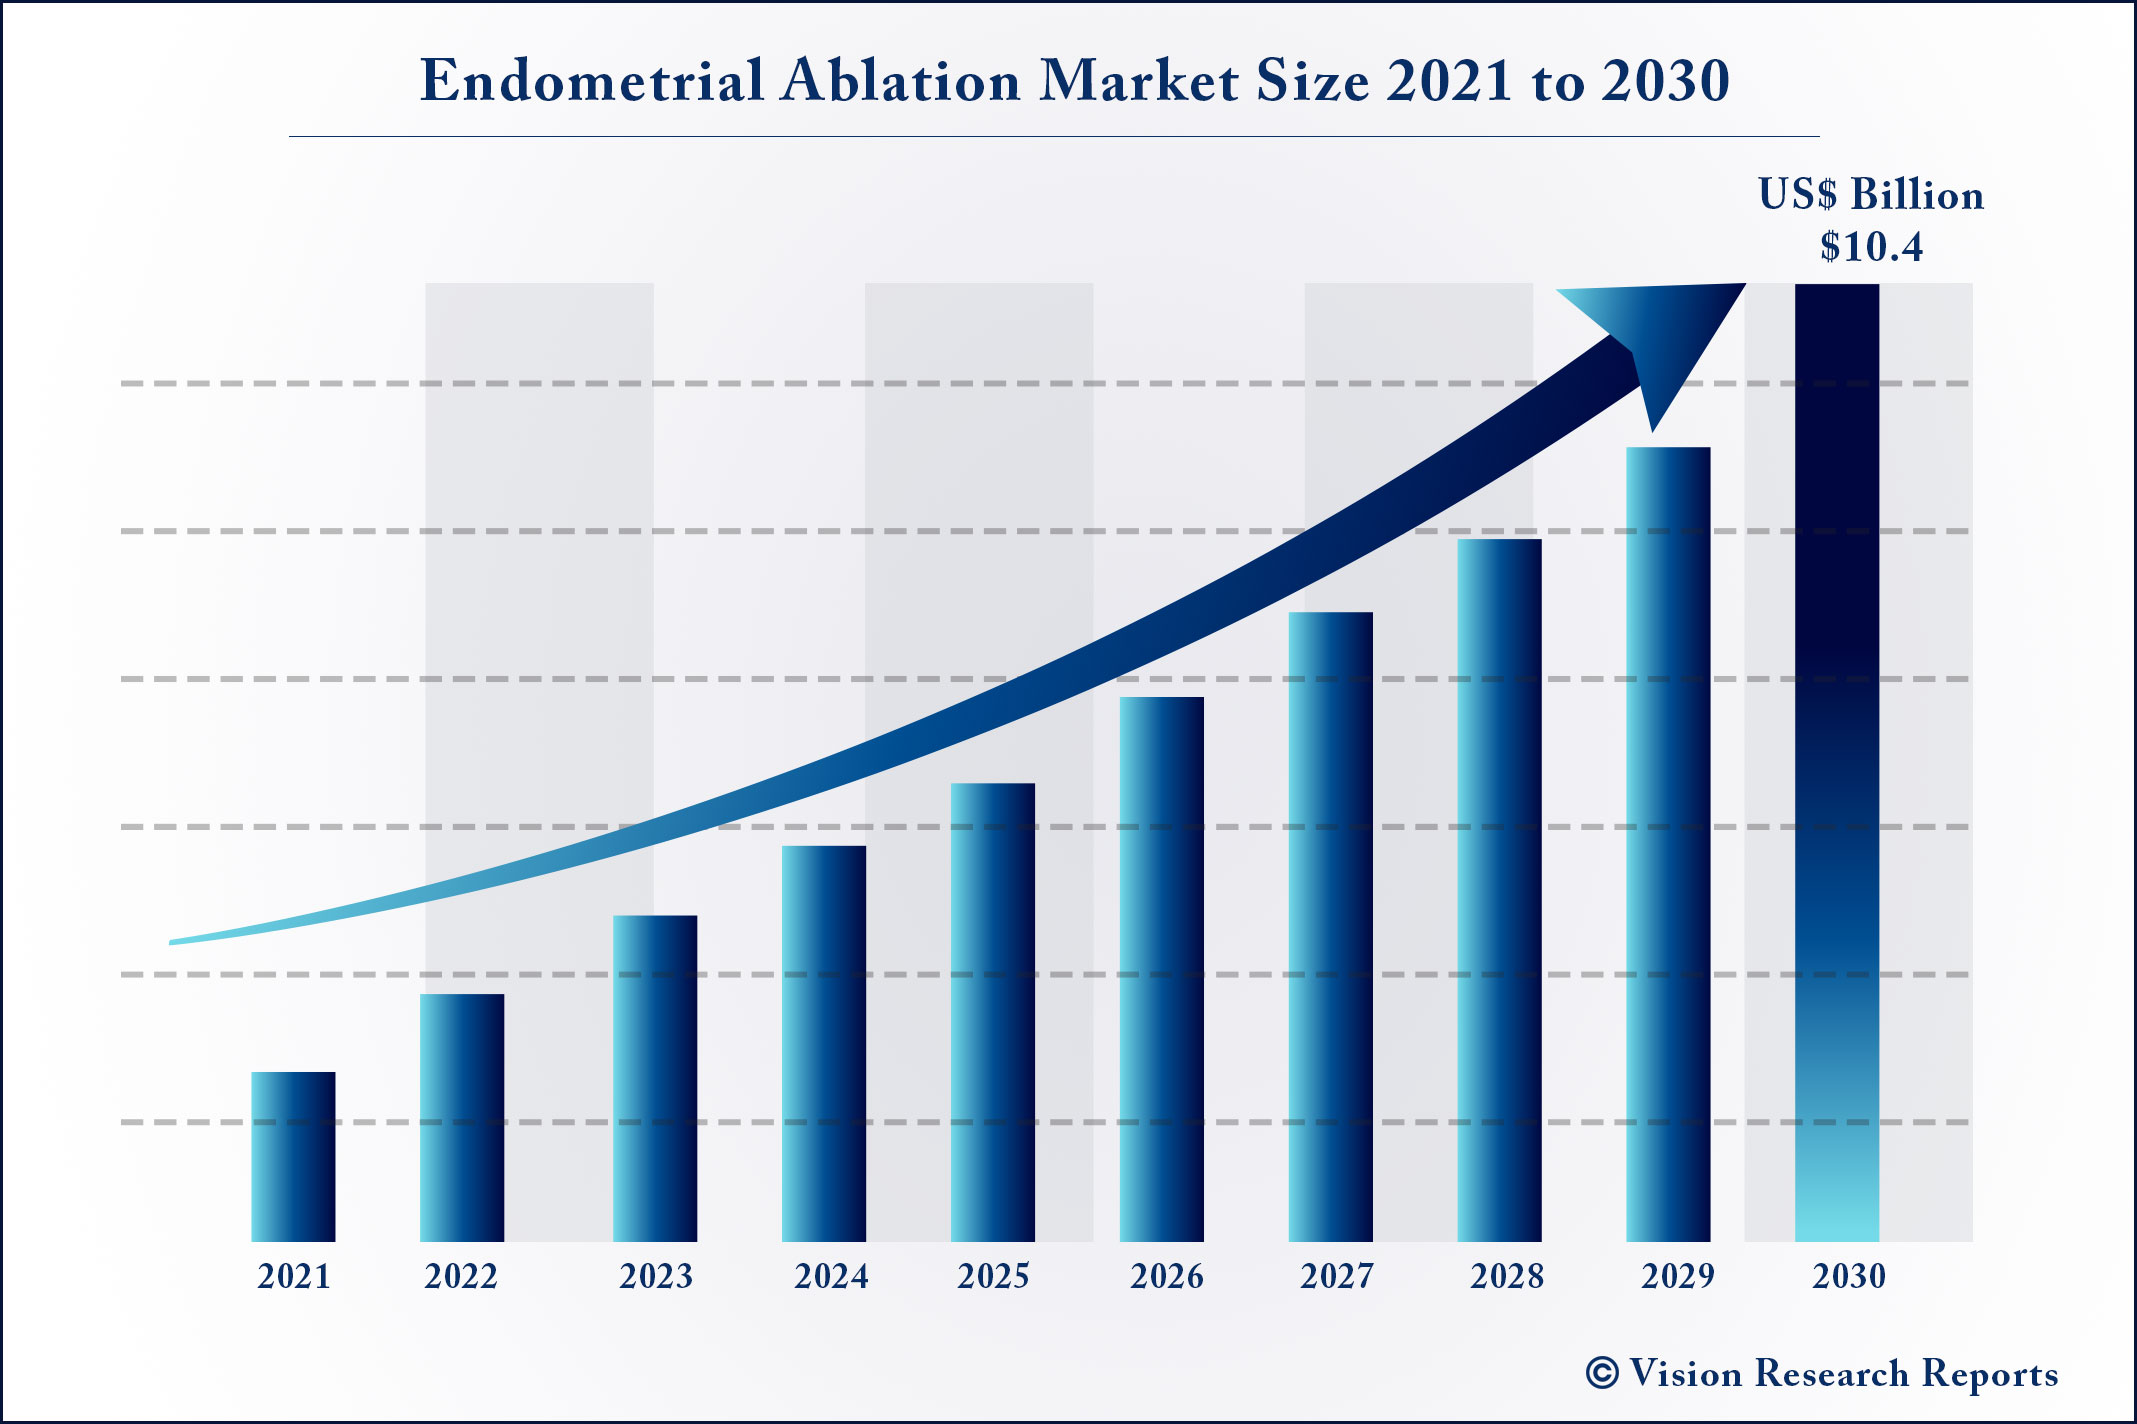 Endometrial Ablation Market Size 2021 to 2030